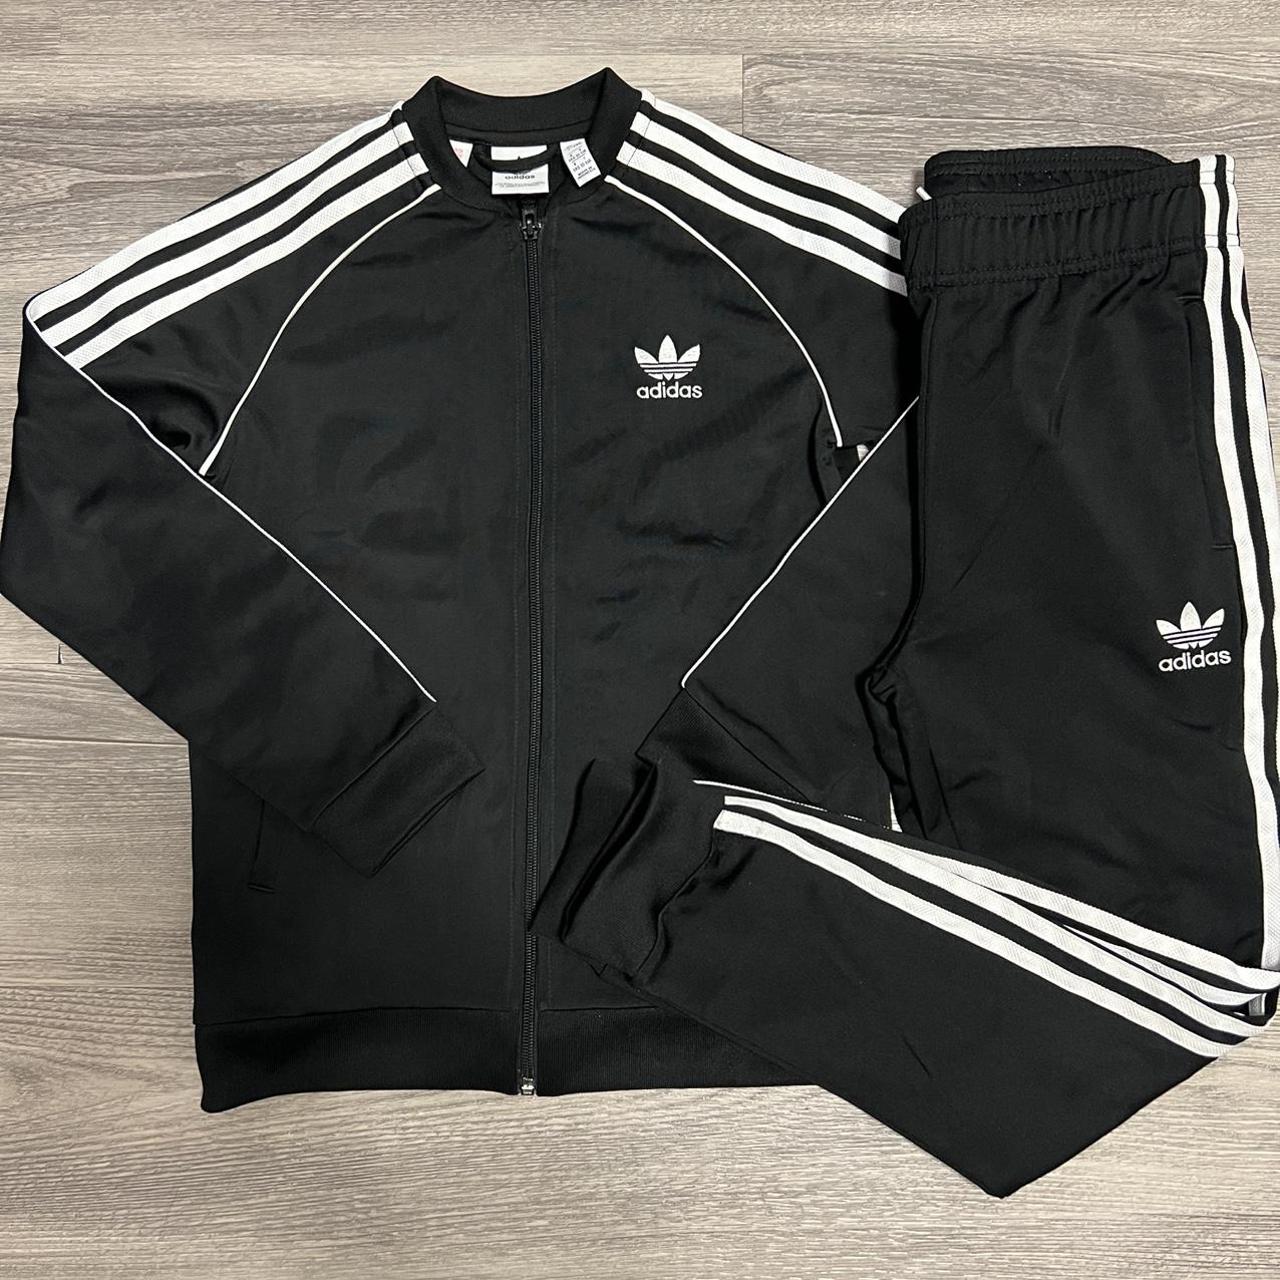 Adidas Black and White Sweatshirt | Depop